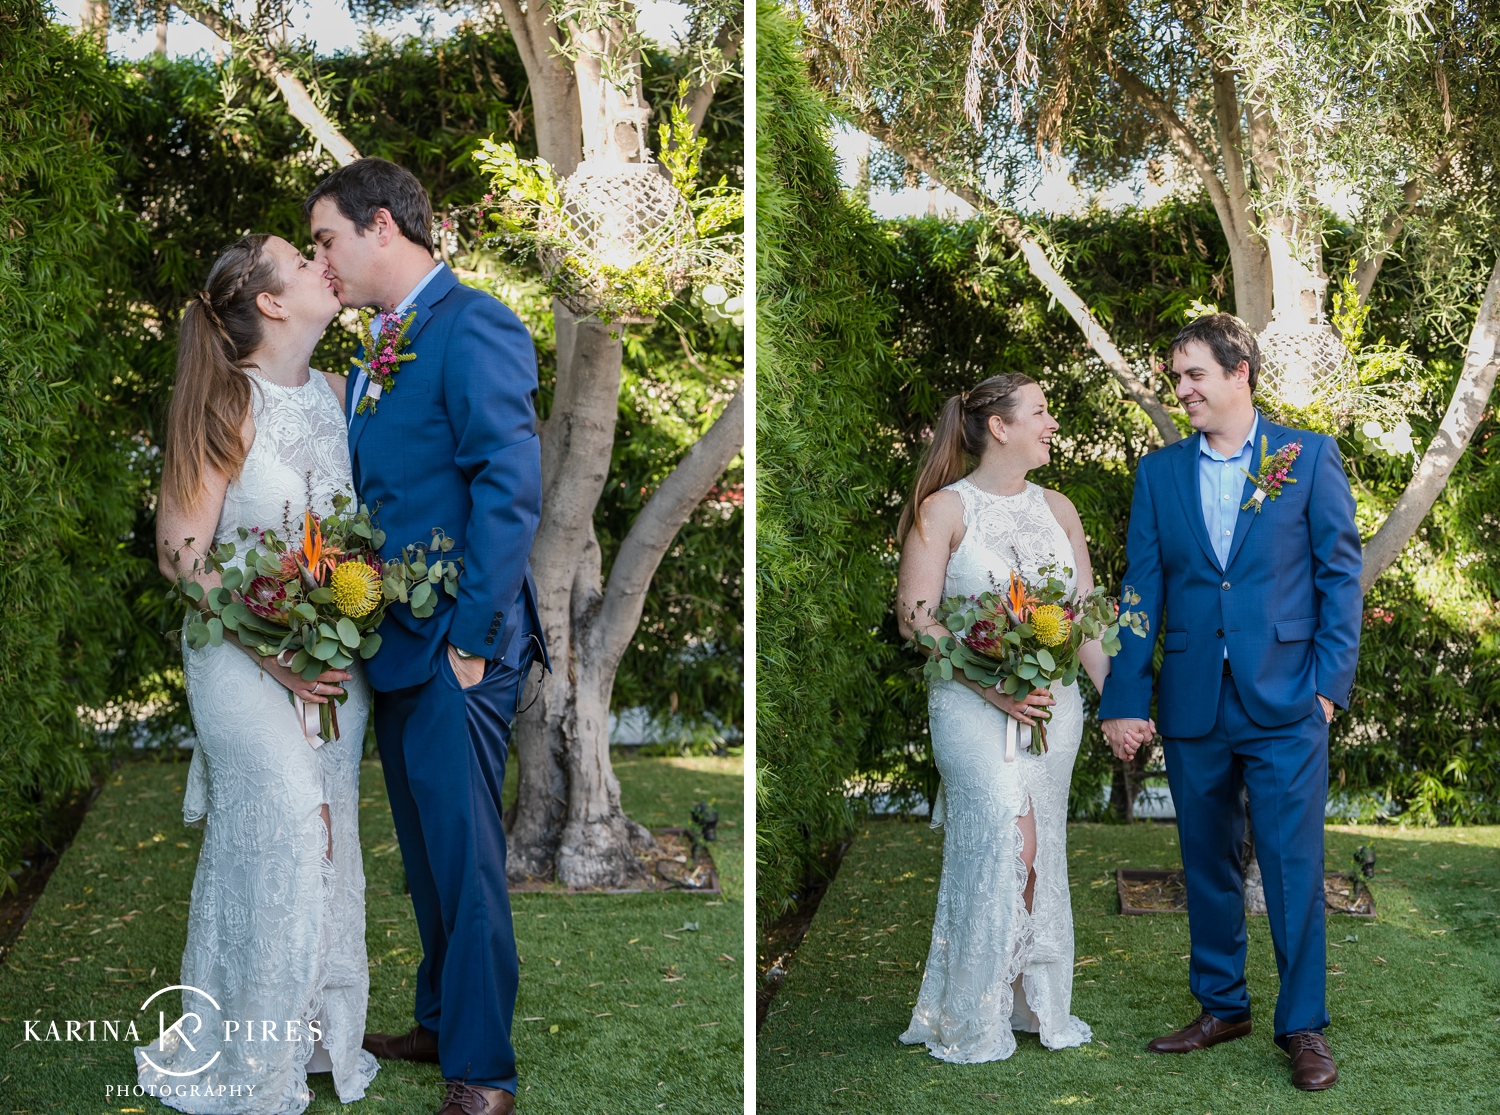 Lindsay and Kyle’s Backyard Wedding Ceremony in Santa Monica